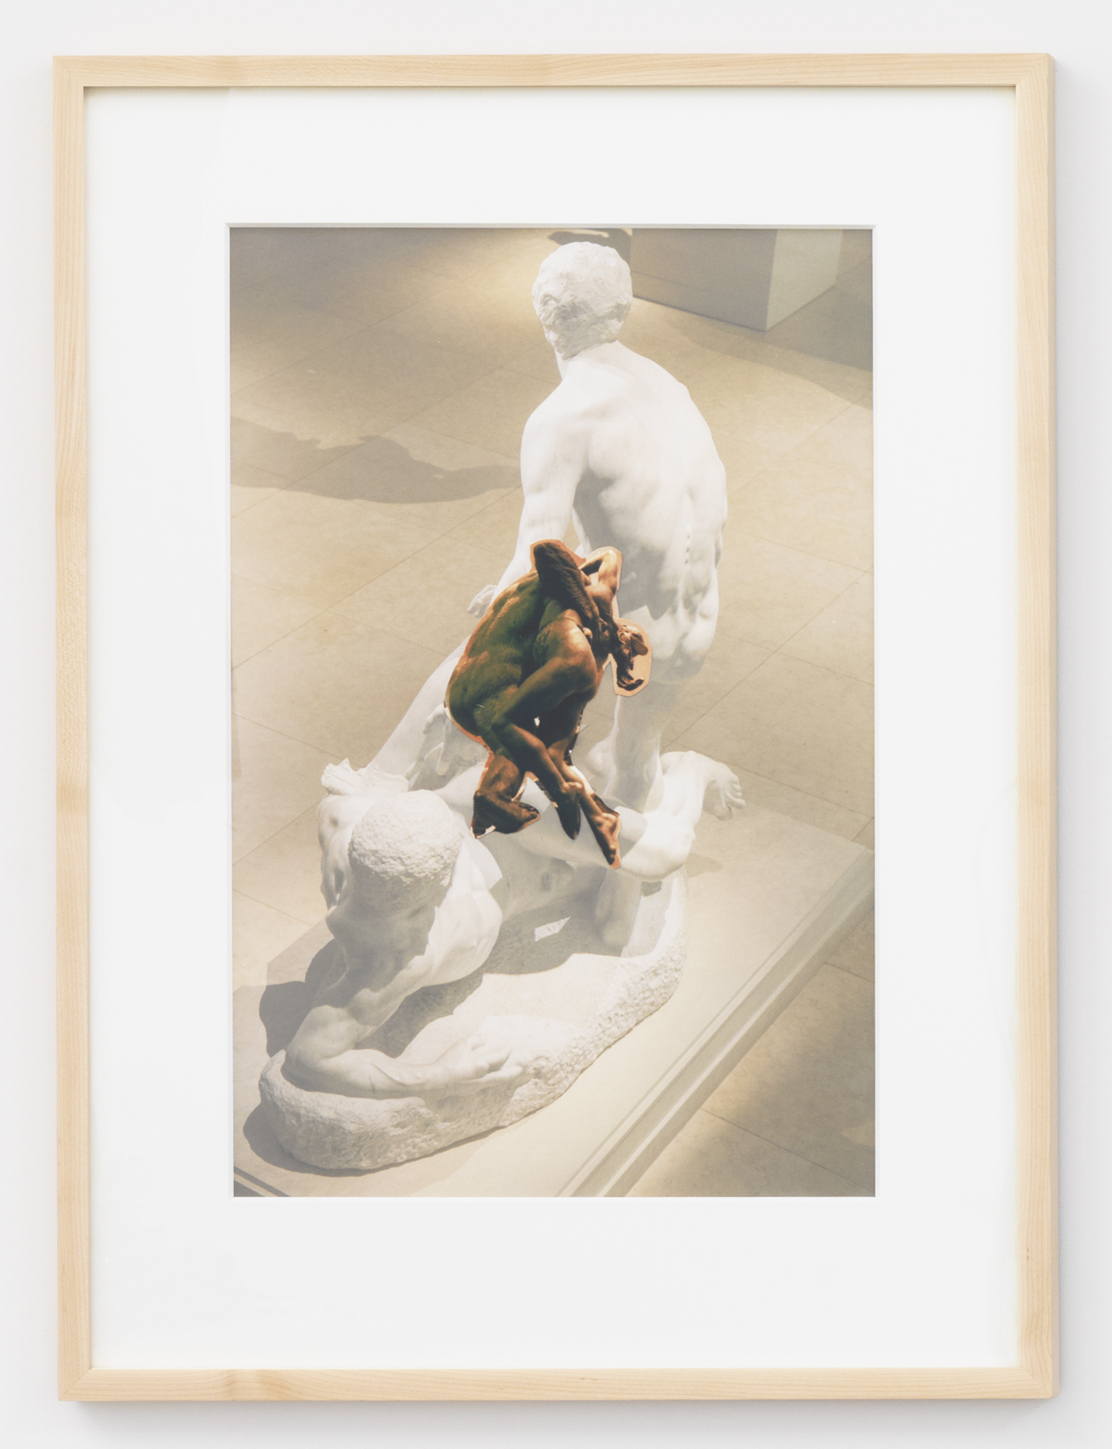 Aura Rosenberg and Adam Marnie, Je sens deux hommes, un gorille et une femme en moi, 2017, inkjet photo collage, framed: 26.4h x 19.6w in.